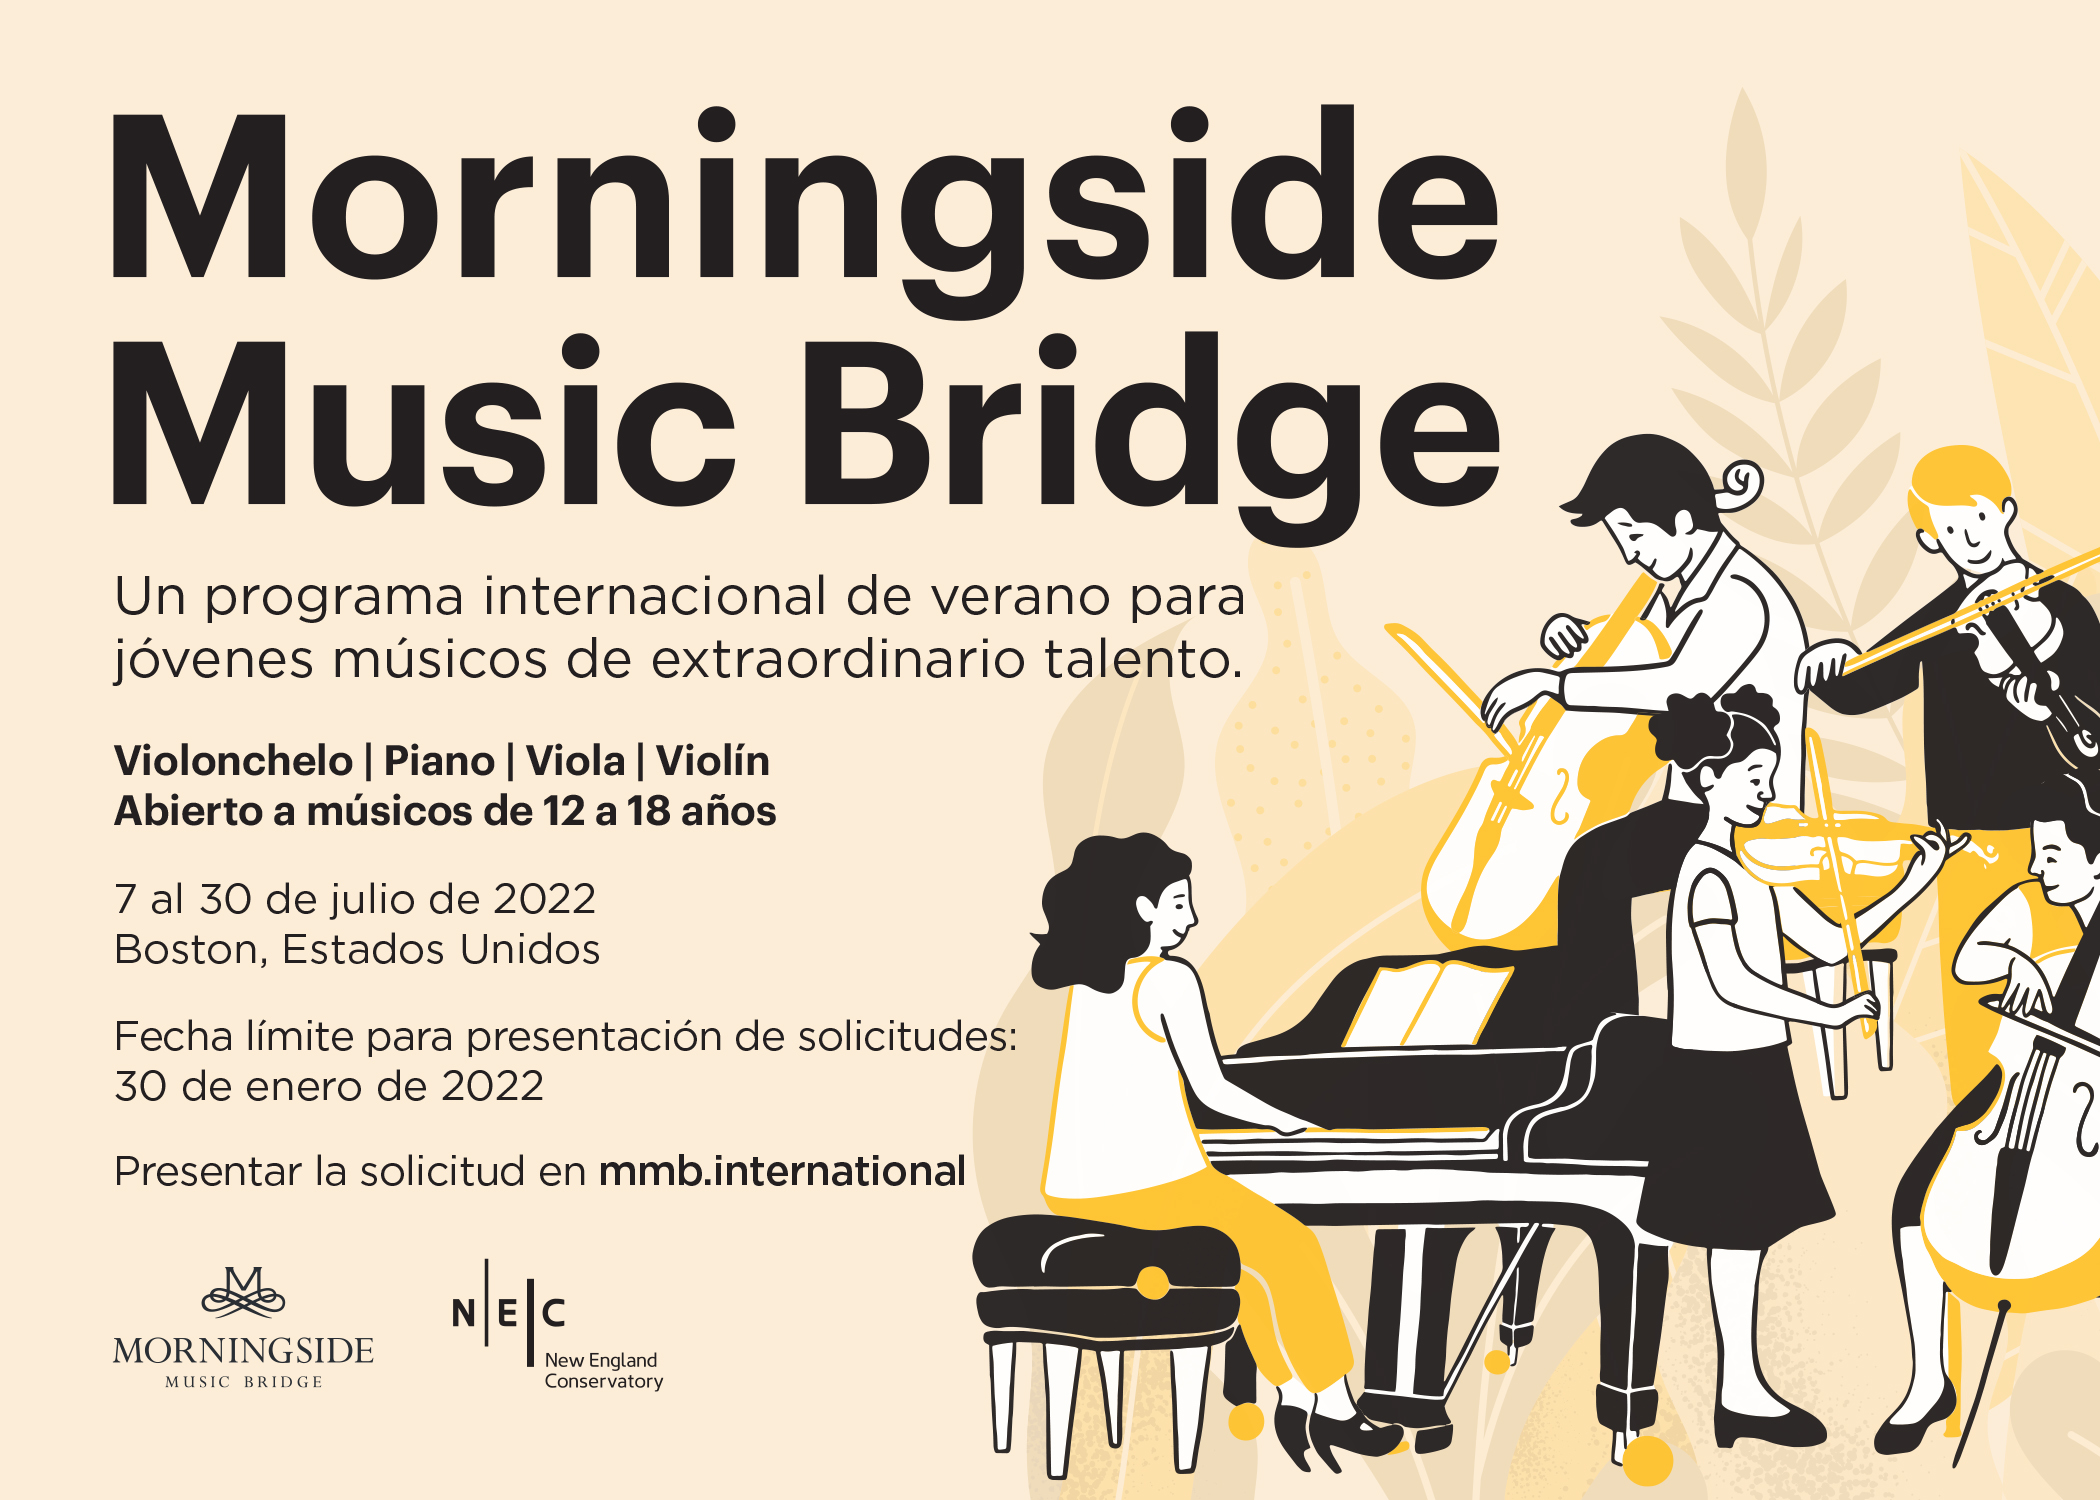 Programa Morningside Music Bridge (MMB) de Canadá